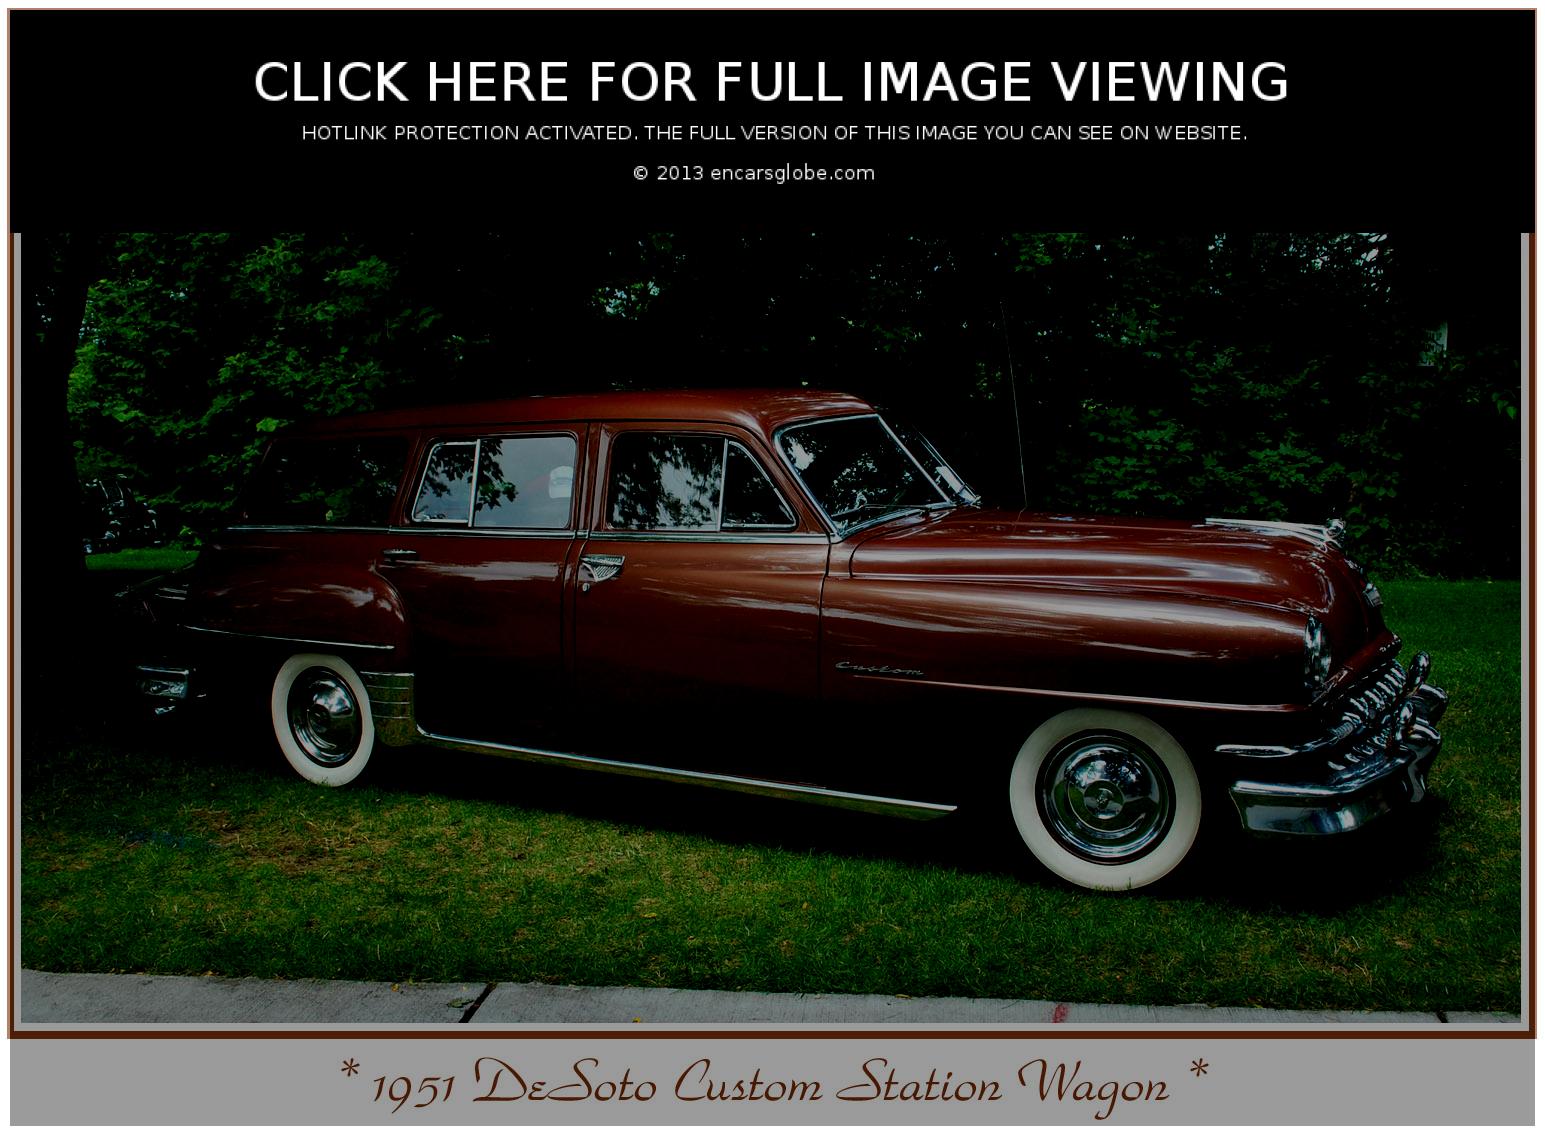 De Soto Model K Sedan Photo Gallery: Photo #06 out of 11, Image ...